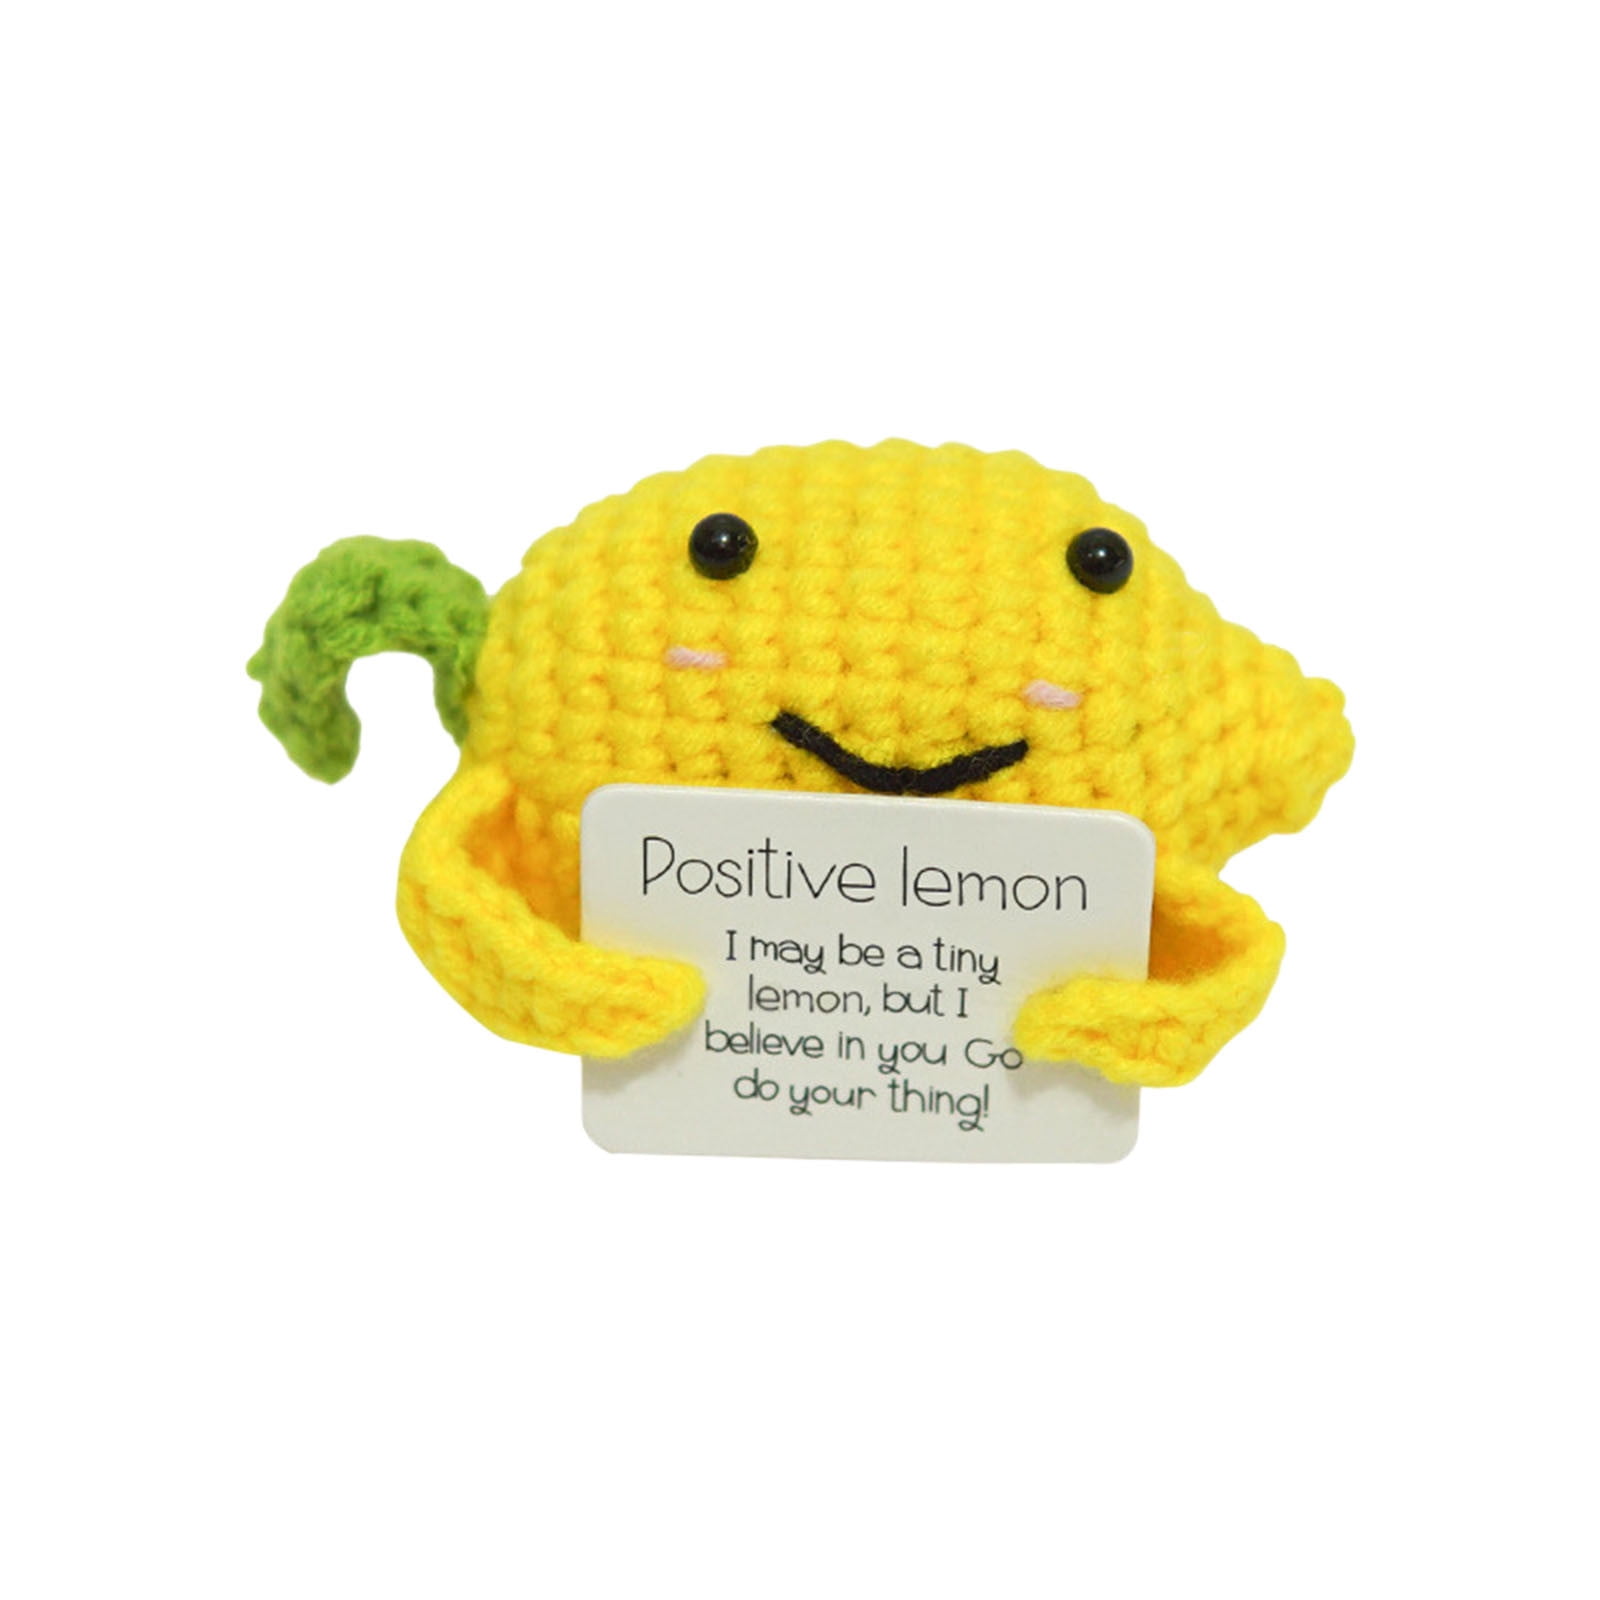 Handmade Emotional Support Pickled Cucumber Gift, Handmade Crochet